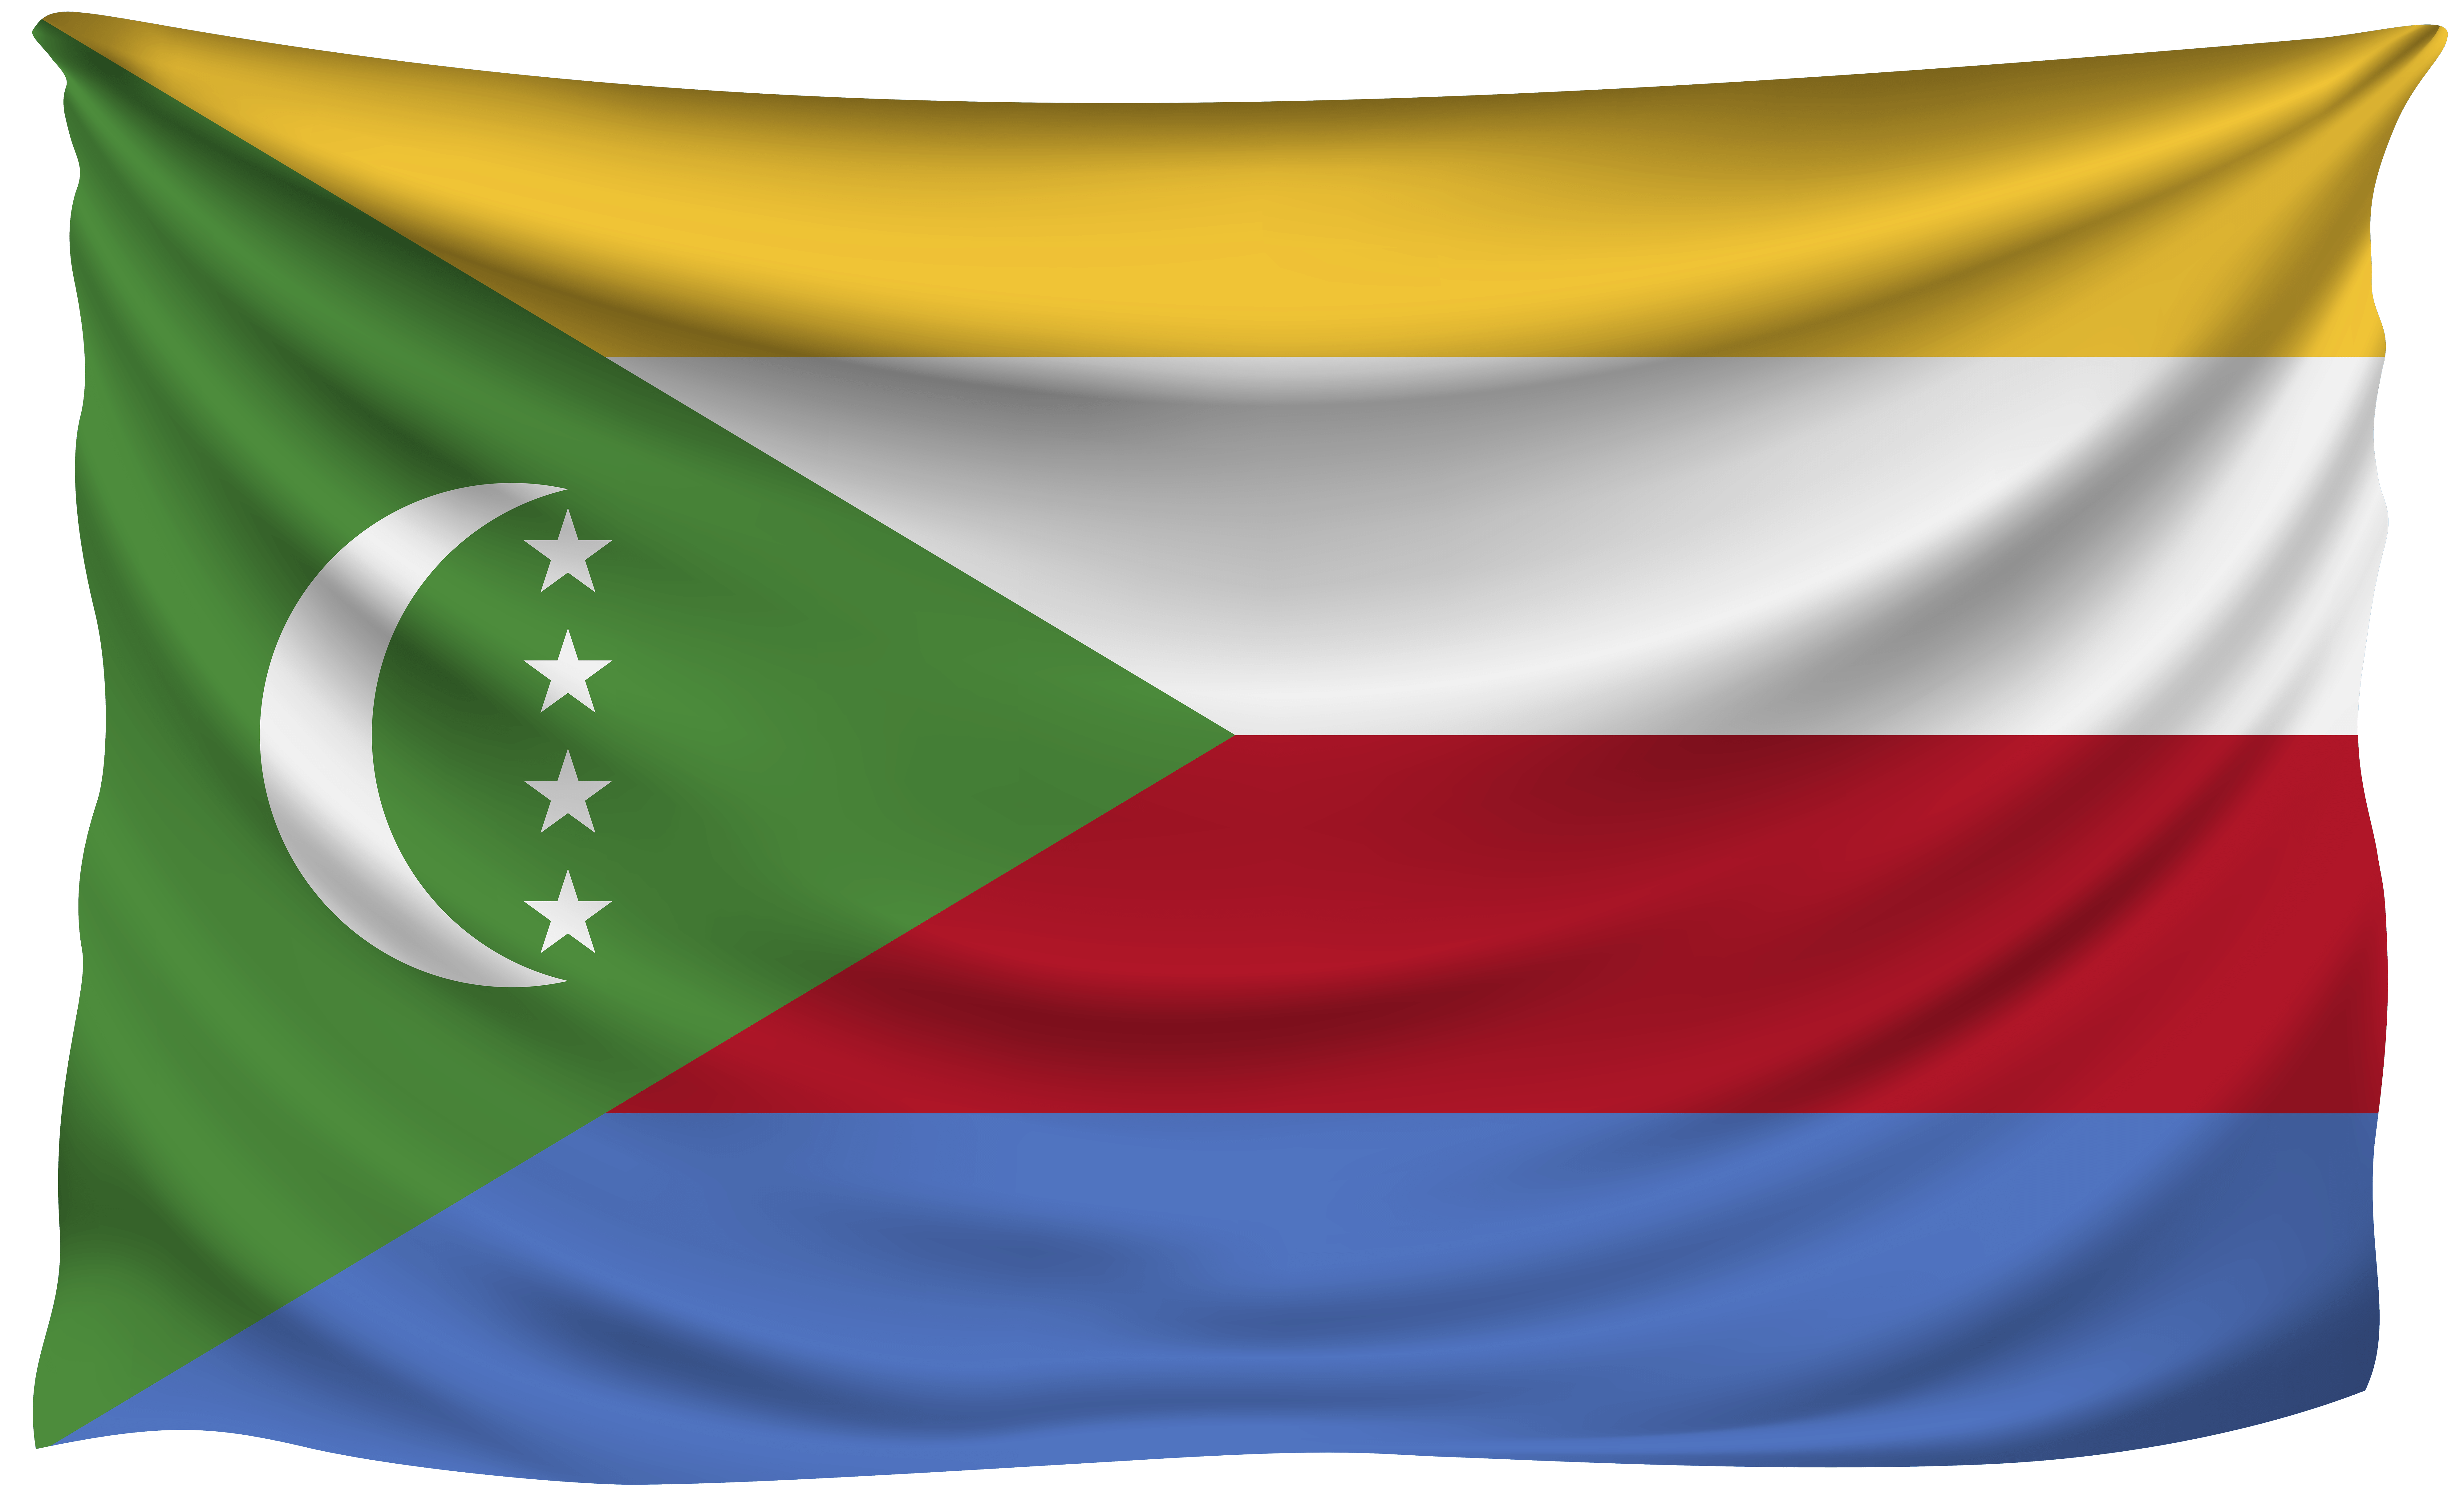 Comoros Wrinkled Flag Quality Image